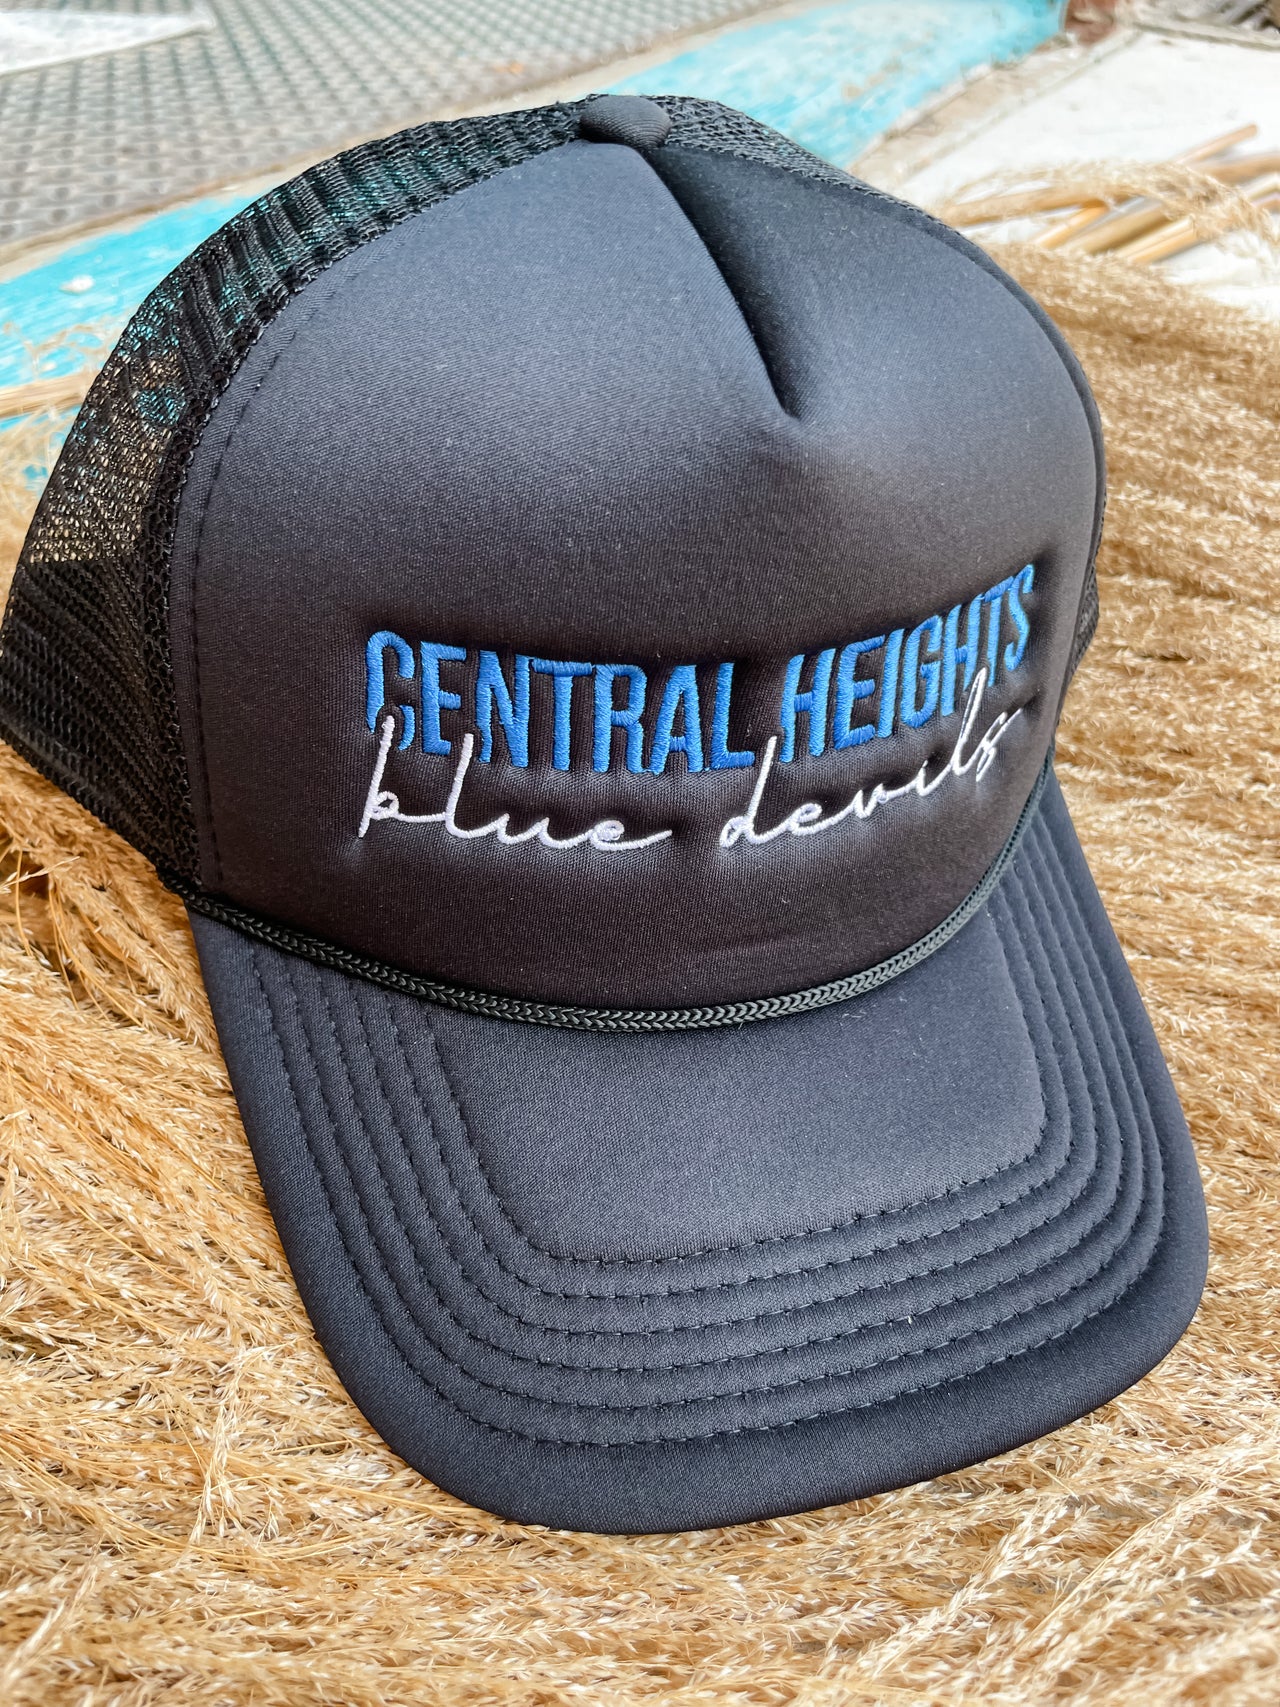 Central Heights Blue Devils Foam Hat